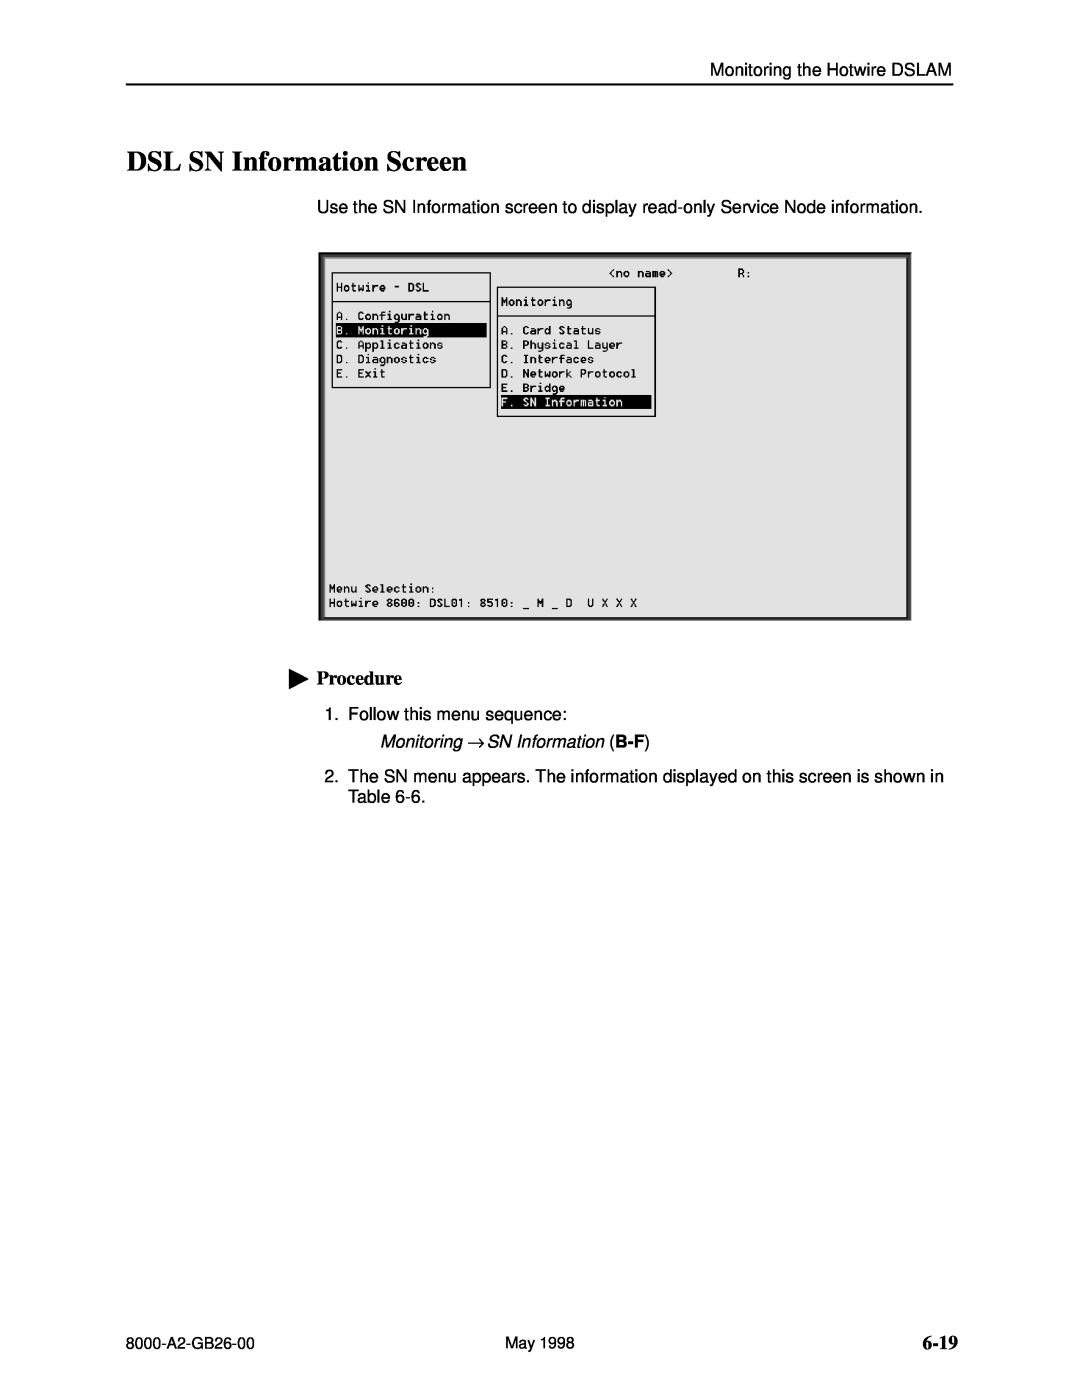 Paradyne 8510 DSL, 8310 MVL manual DSL SN Information Screen, 6-19, Procedure 